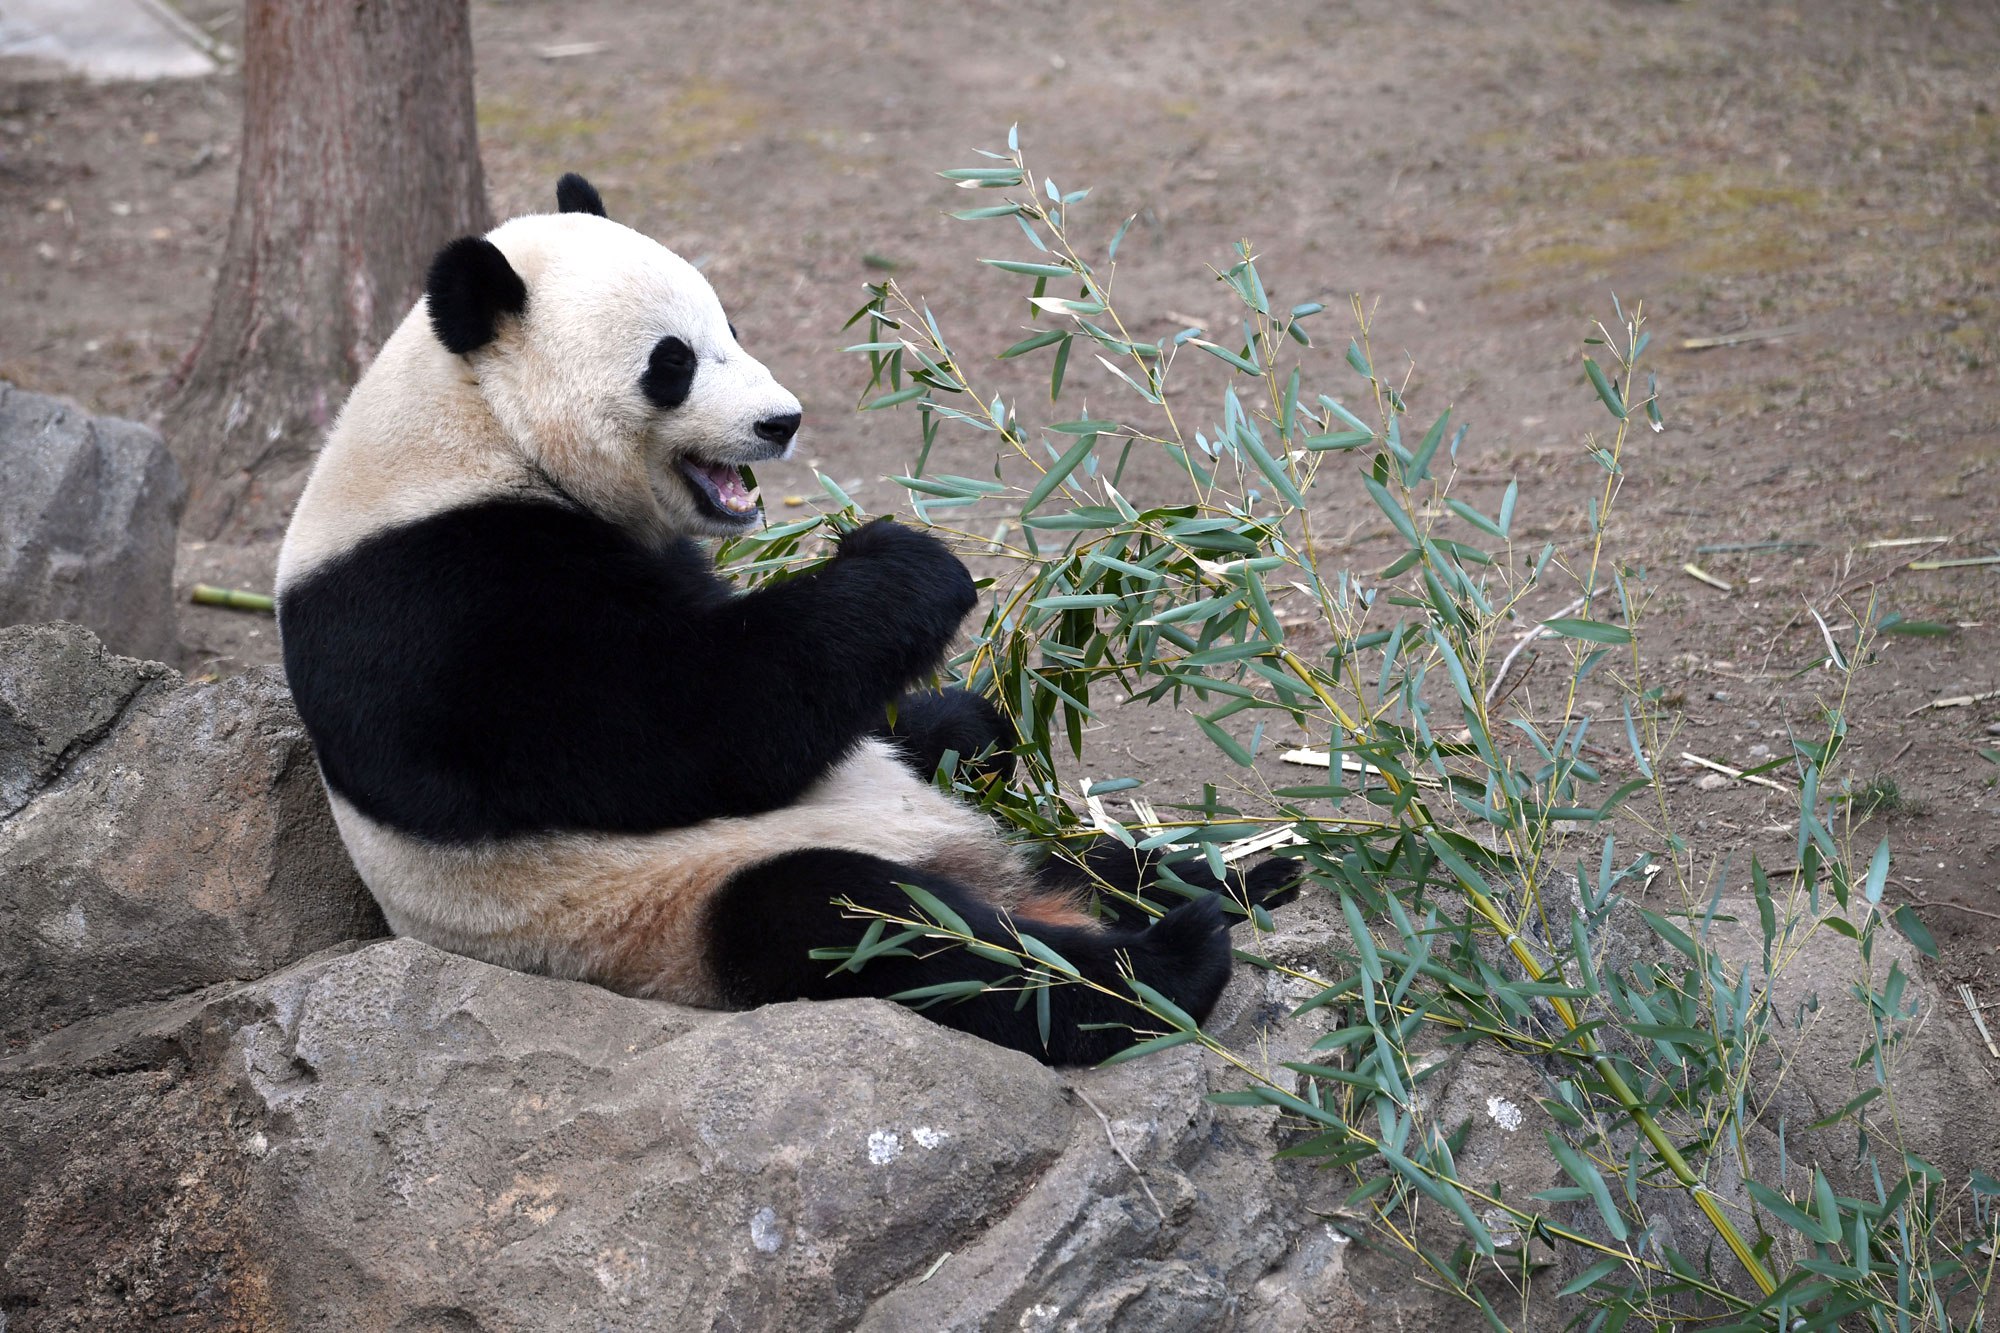 National Zoo giving its giant panda an epic sendoff